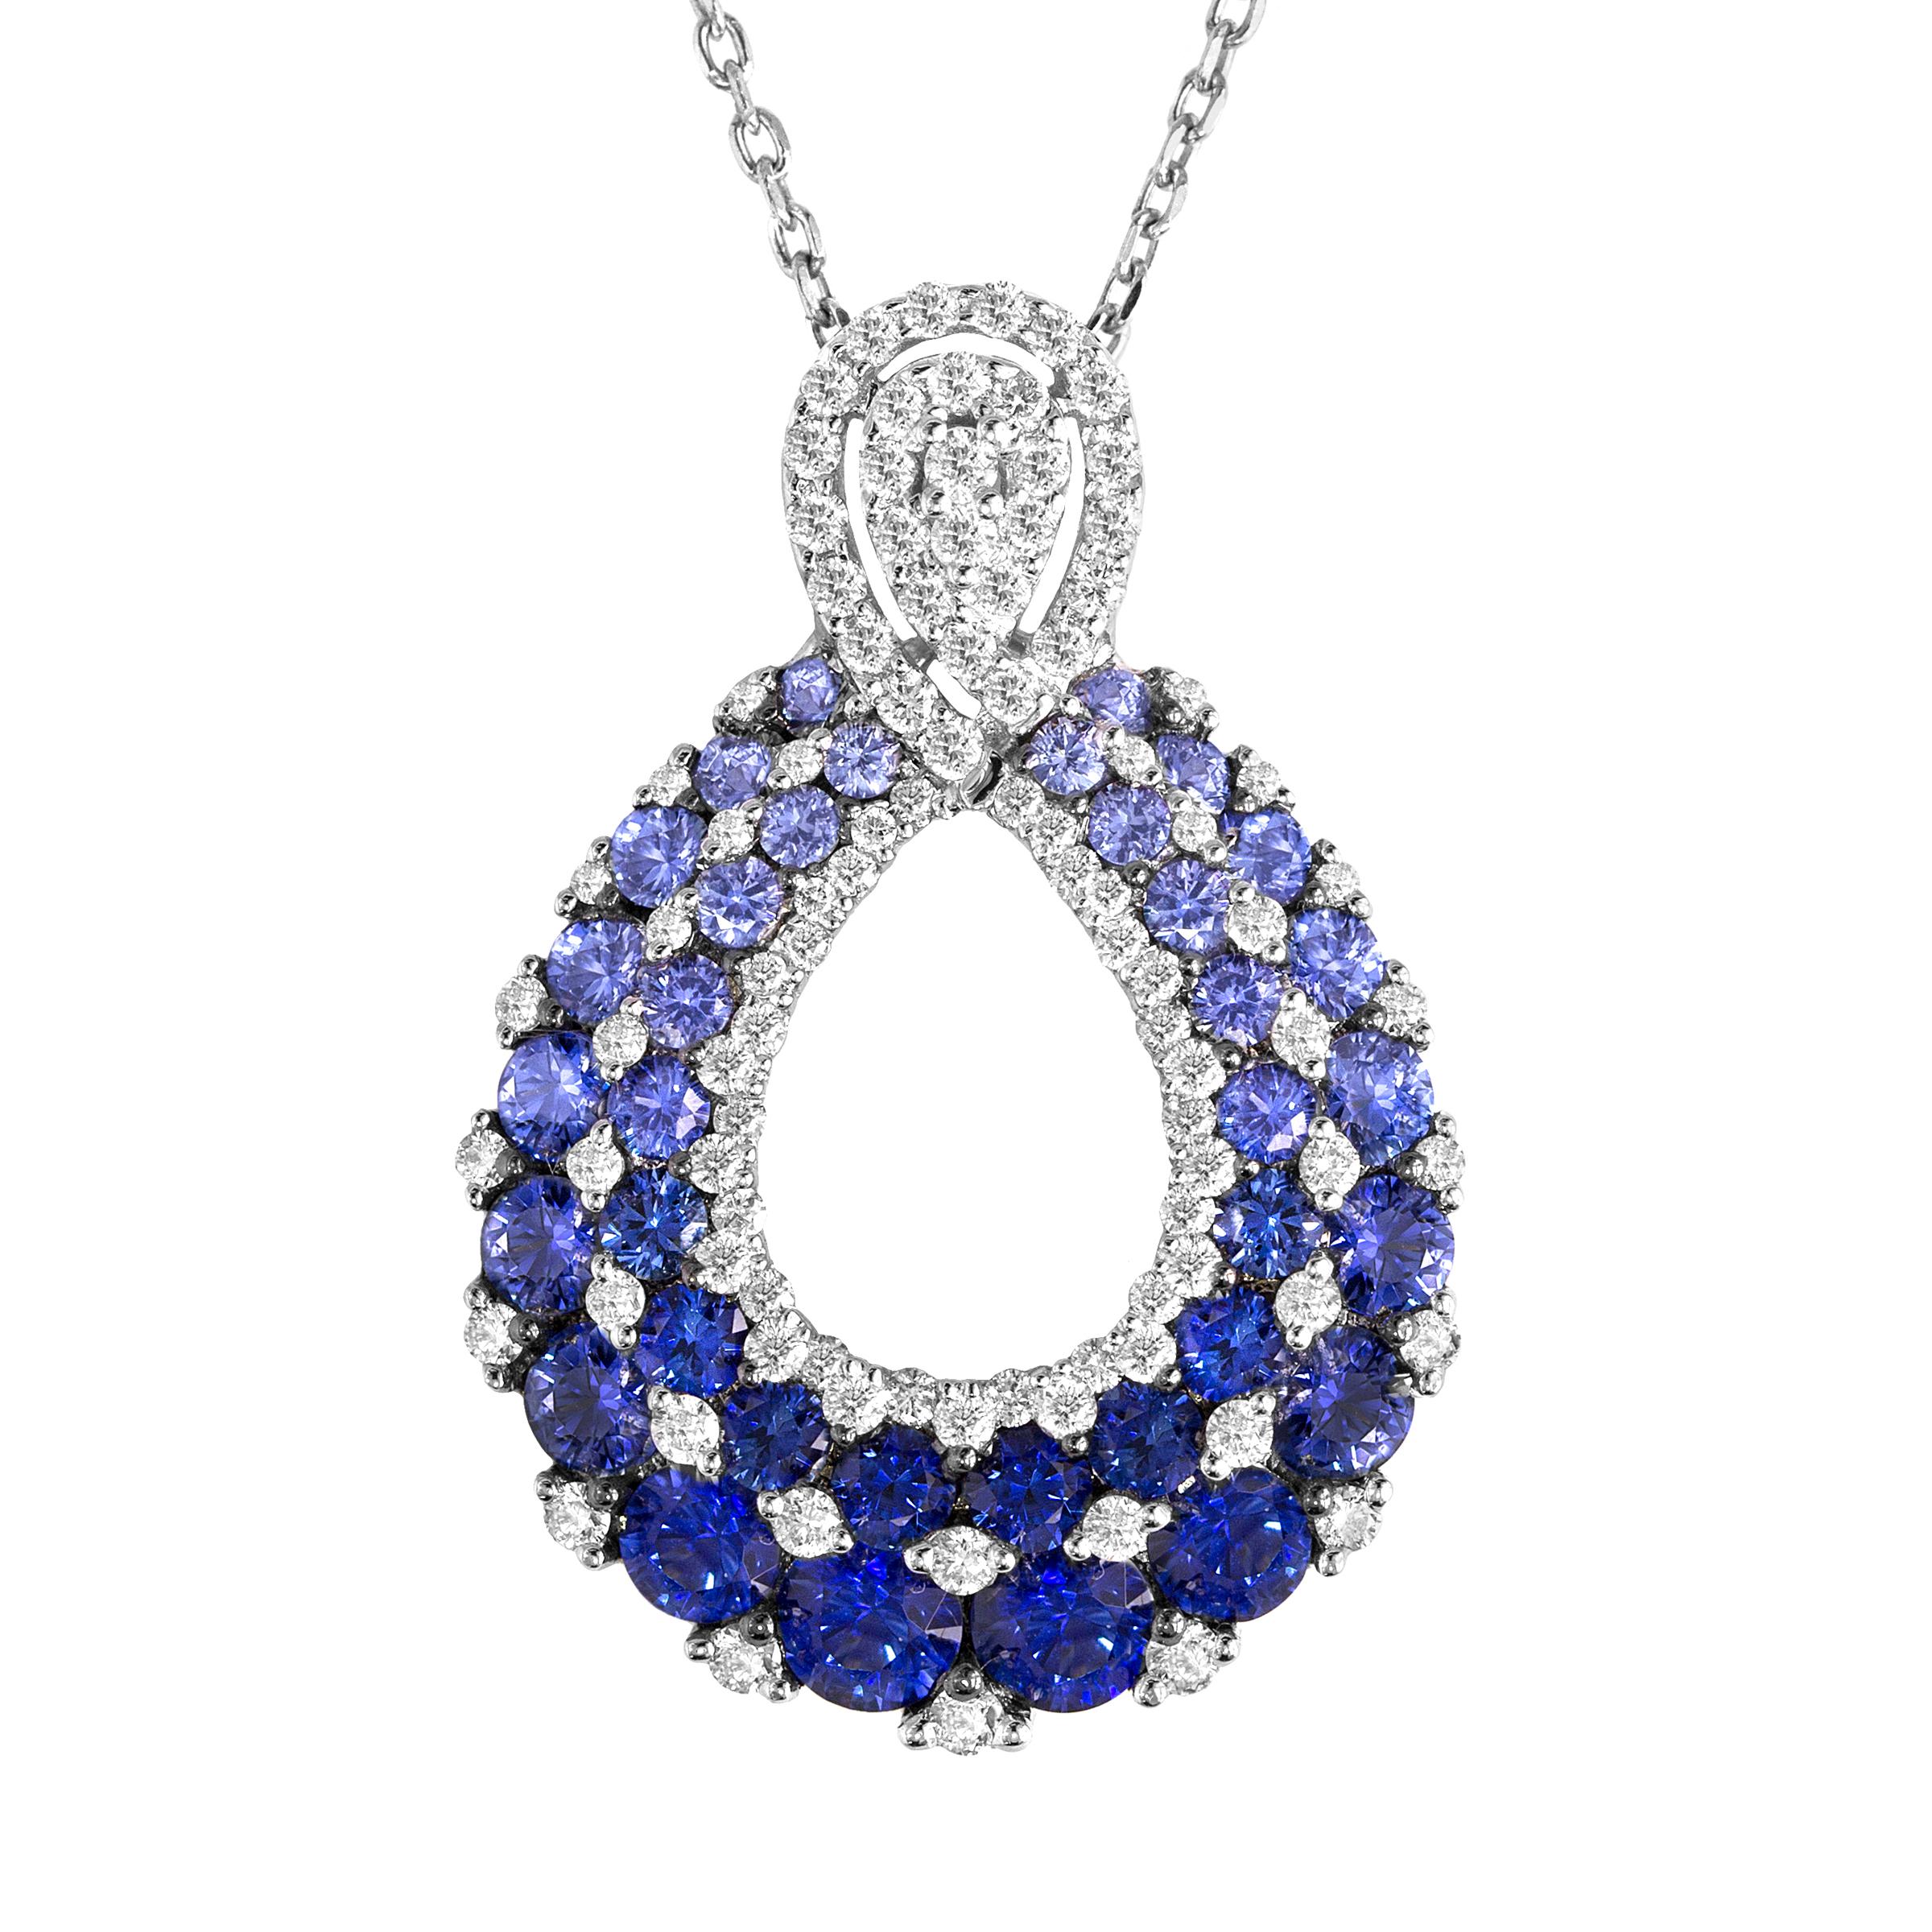 2.09 Carat Vivid Blue Sapphire and Diamond Peacock Pendant in 18 Karat Gold